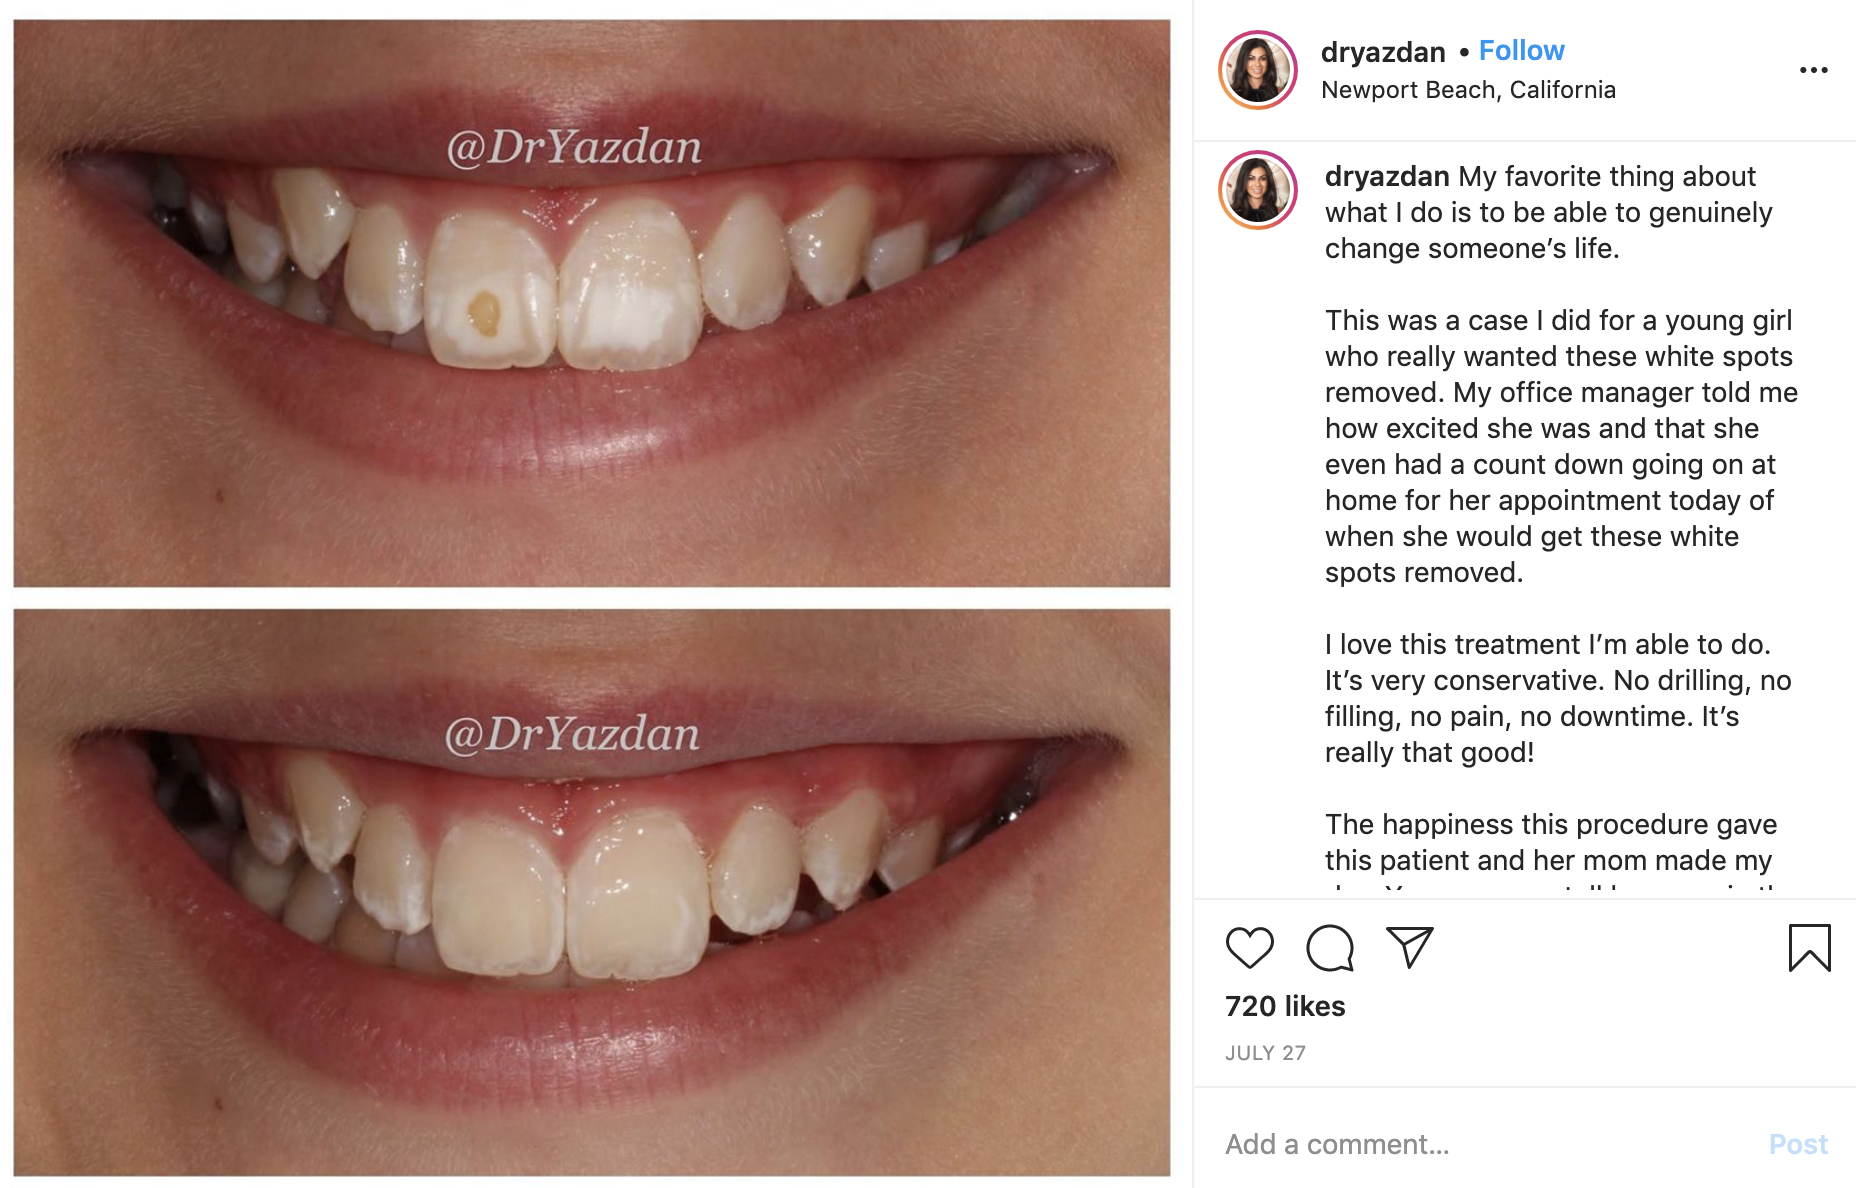 Example of dentist work via Instagram Post 